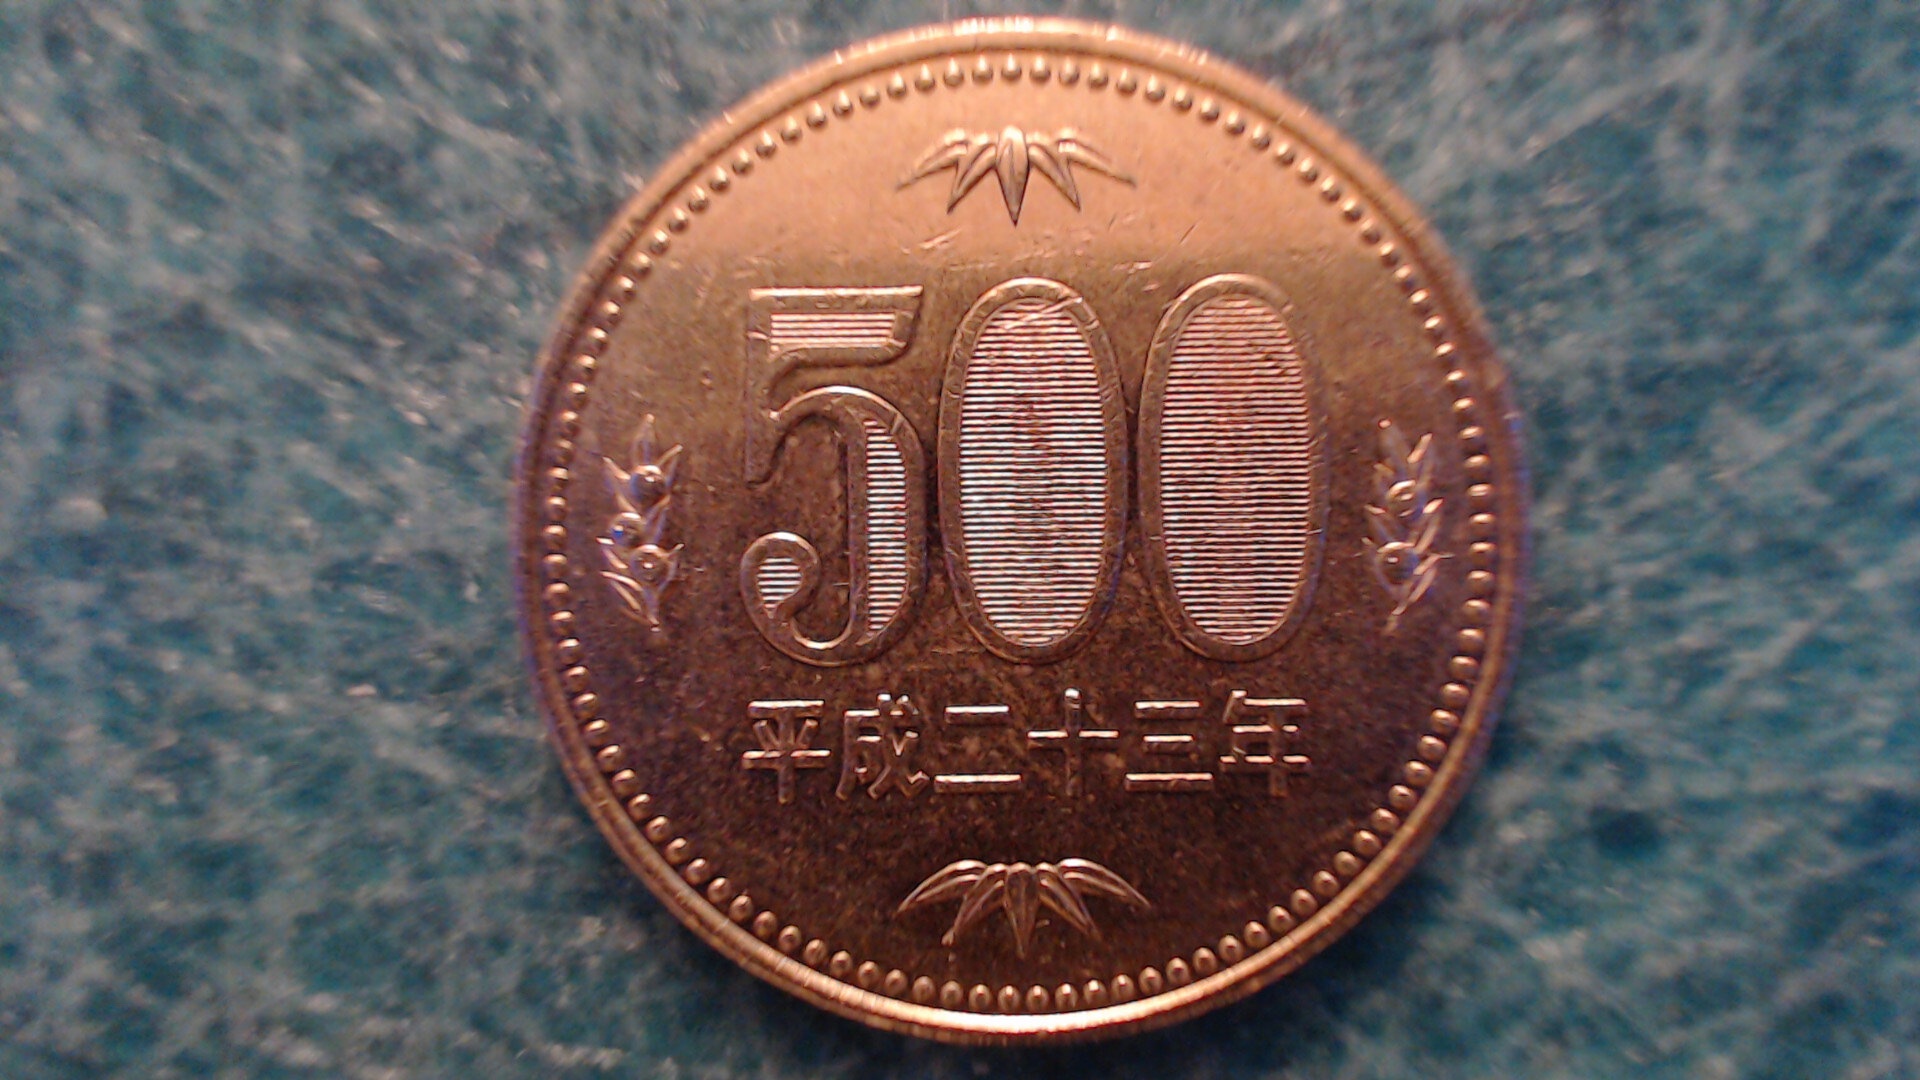 10 ен в рублях. 500 Китайских юаней монета. Монетка 500 китайских юаней. Монеты Китая 500 юаней. Монеты Китая 500.